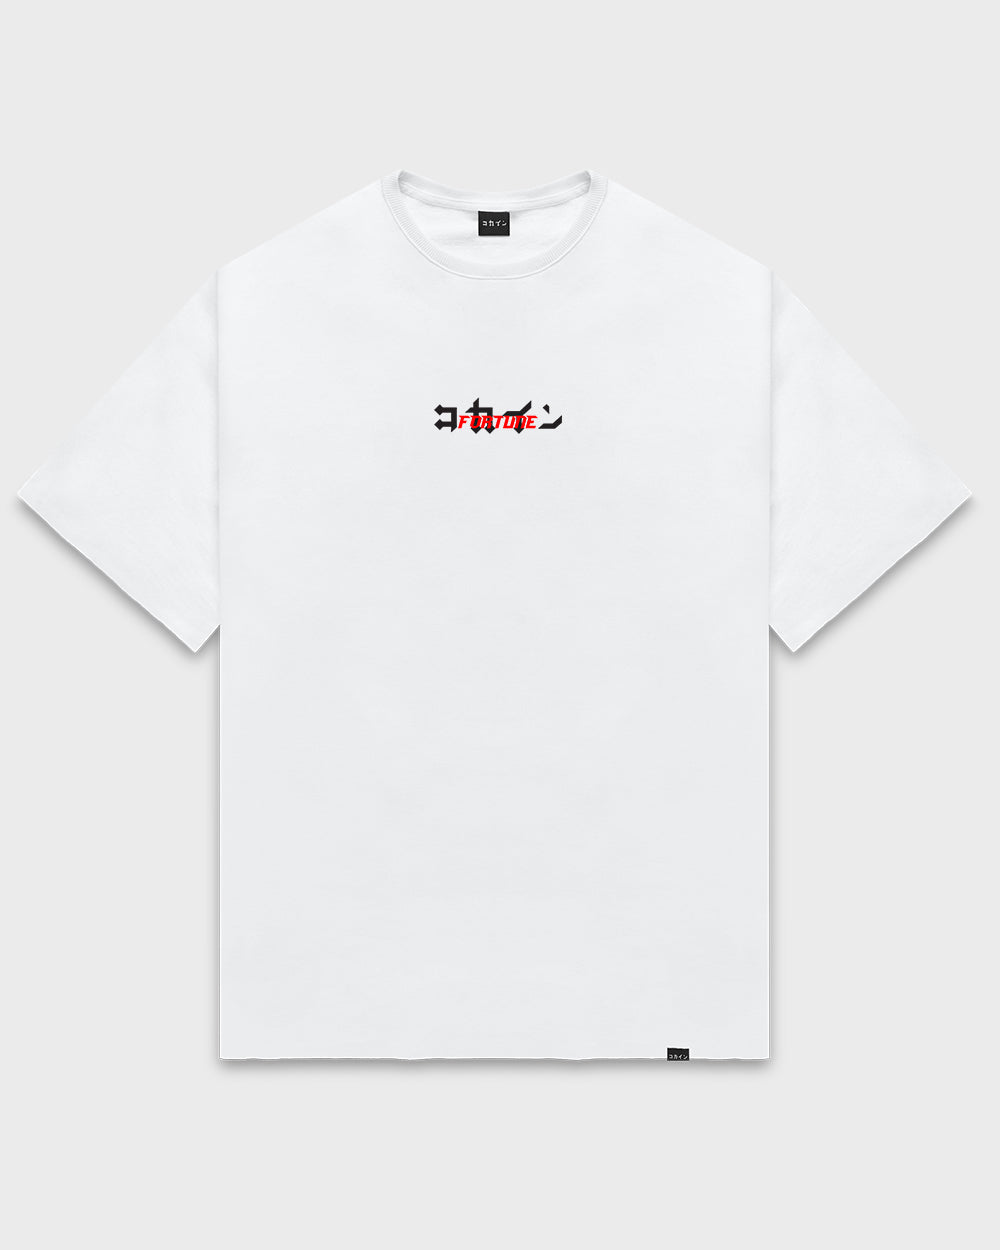 Fortune Gxng x KOKAINE "Collab" T Shirt // White